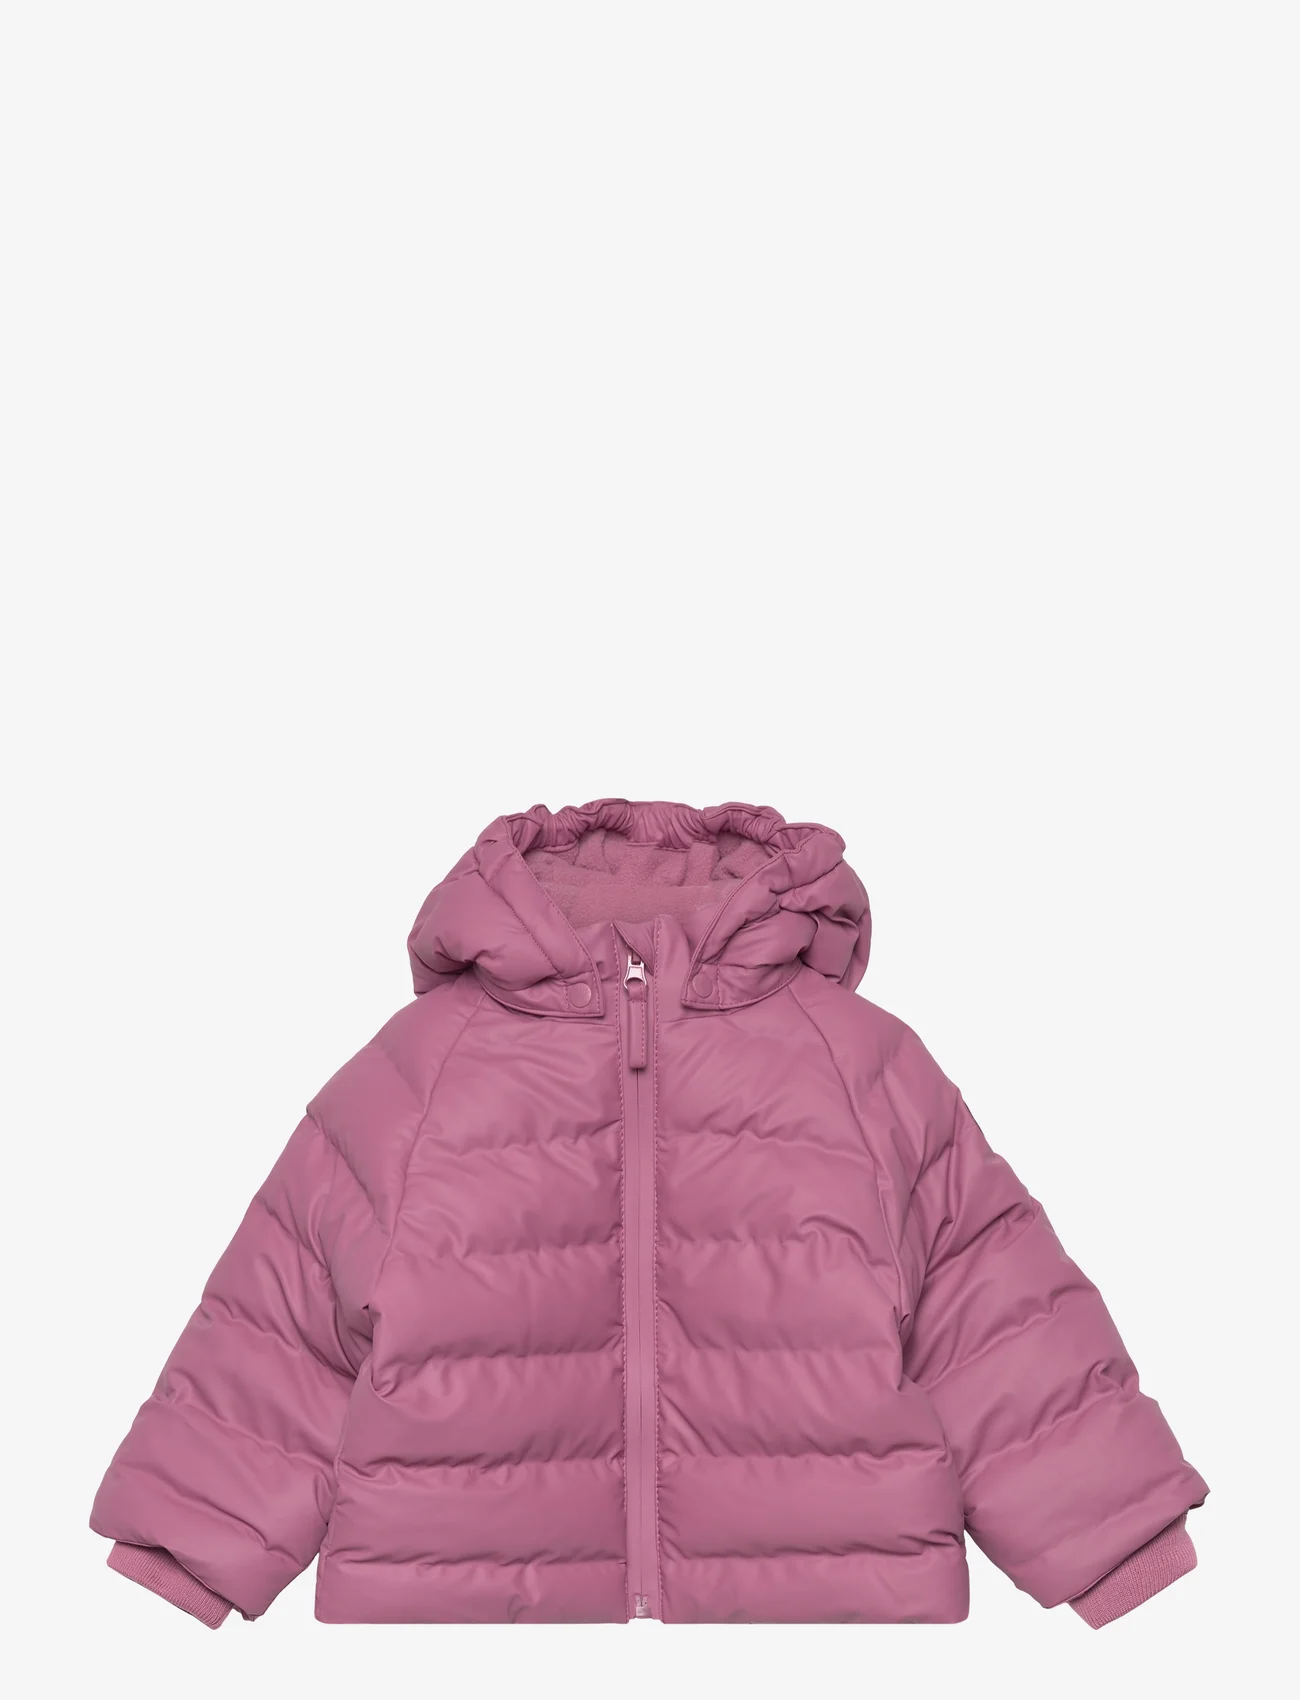 CeLaVi - PU Winter jacket - gewatteerde jassen - mellow mauve - 0